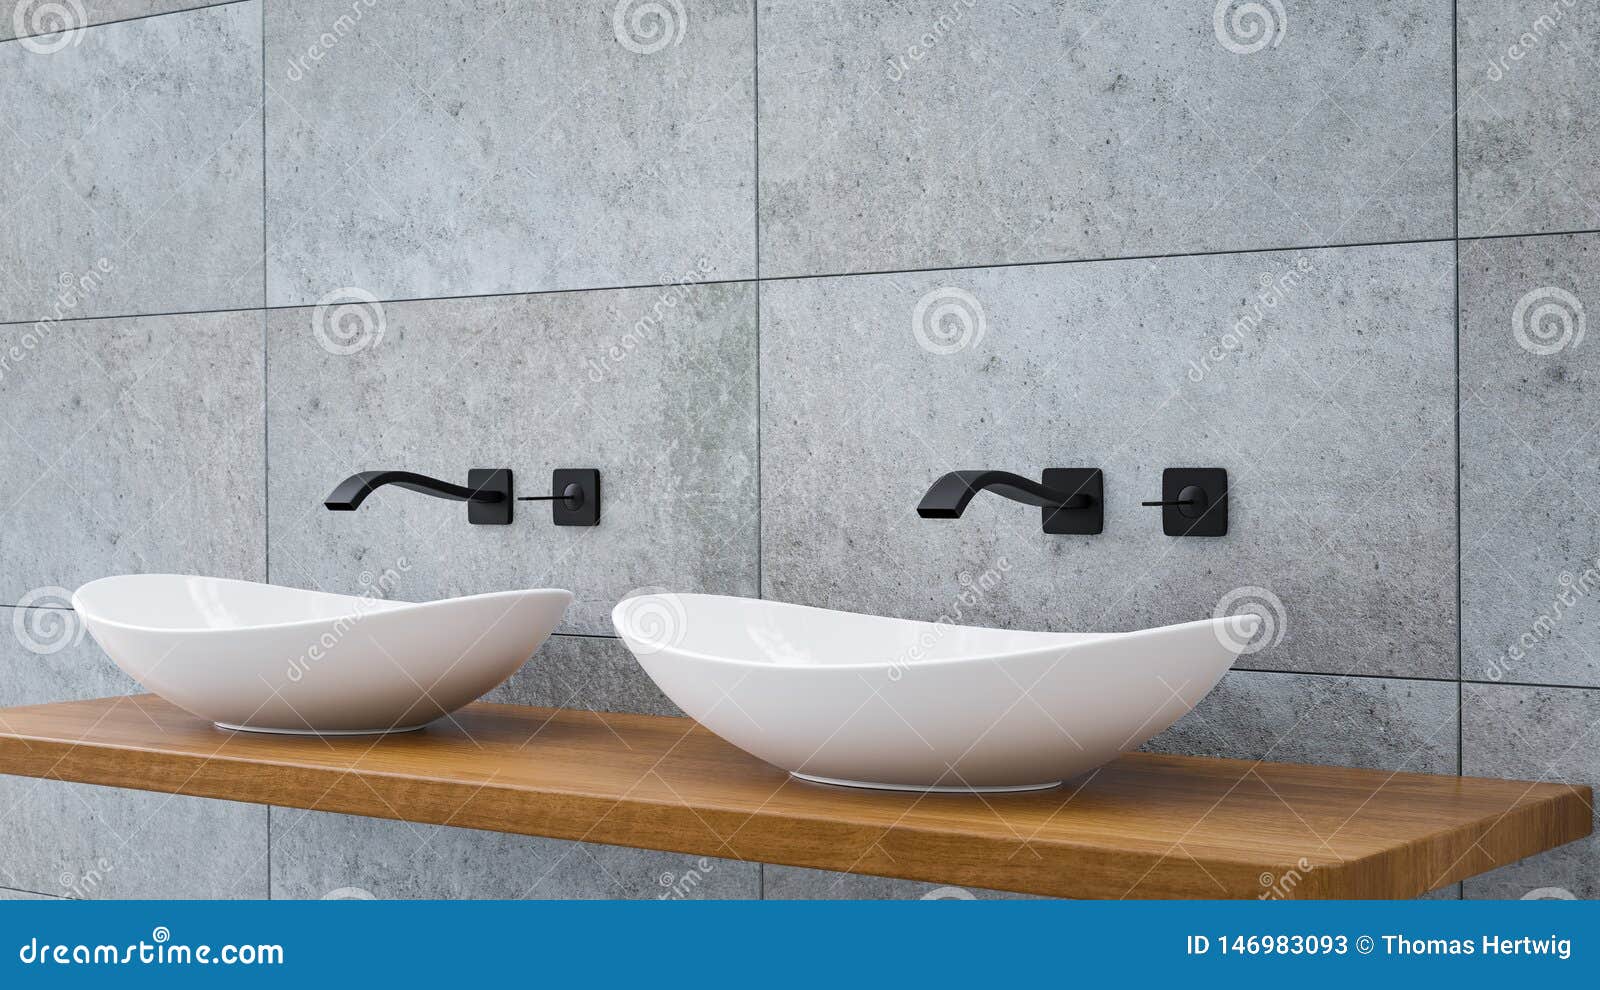 close up of bathroom vanity basin on a wodden oak top vanity with black water faucet 3d-